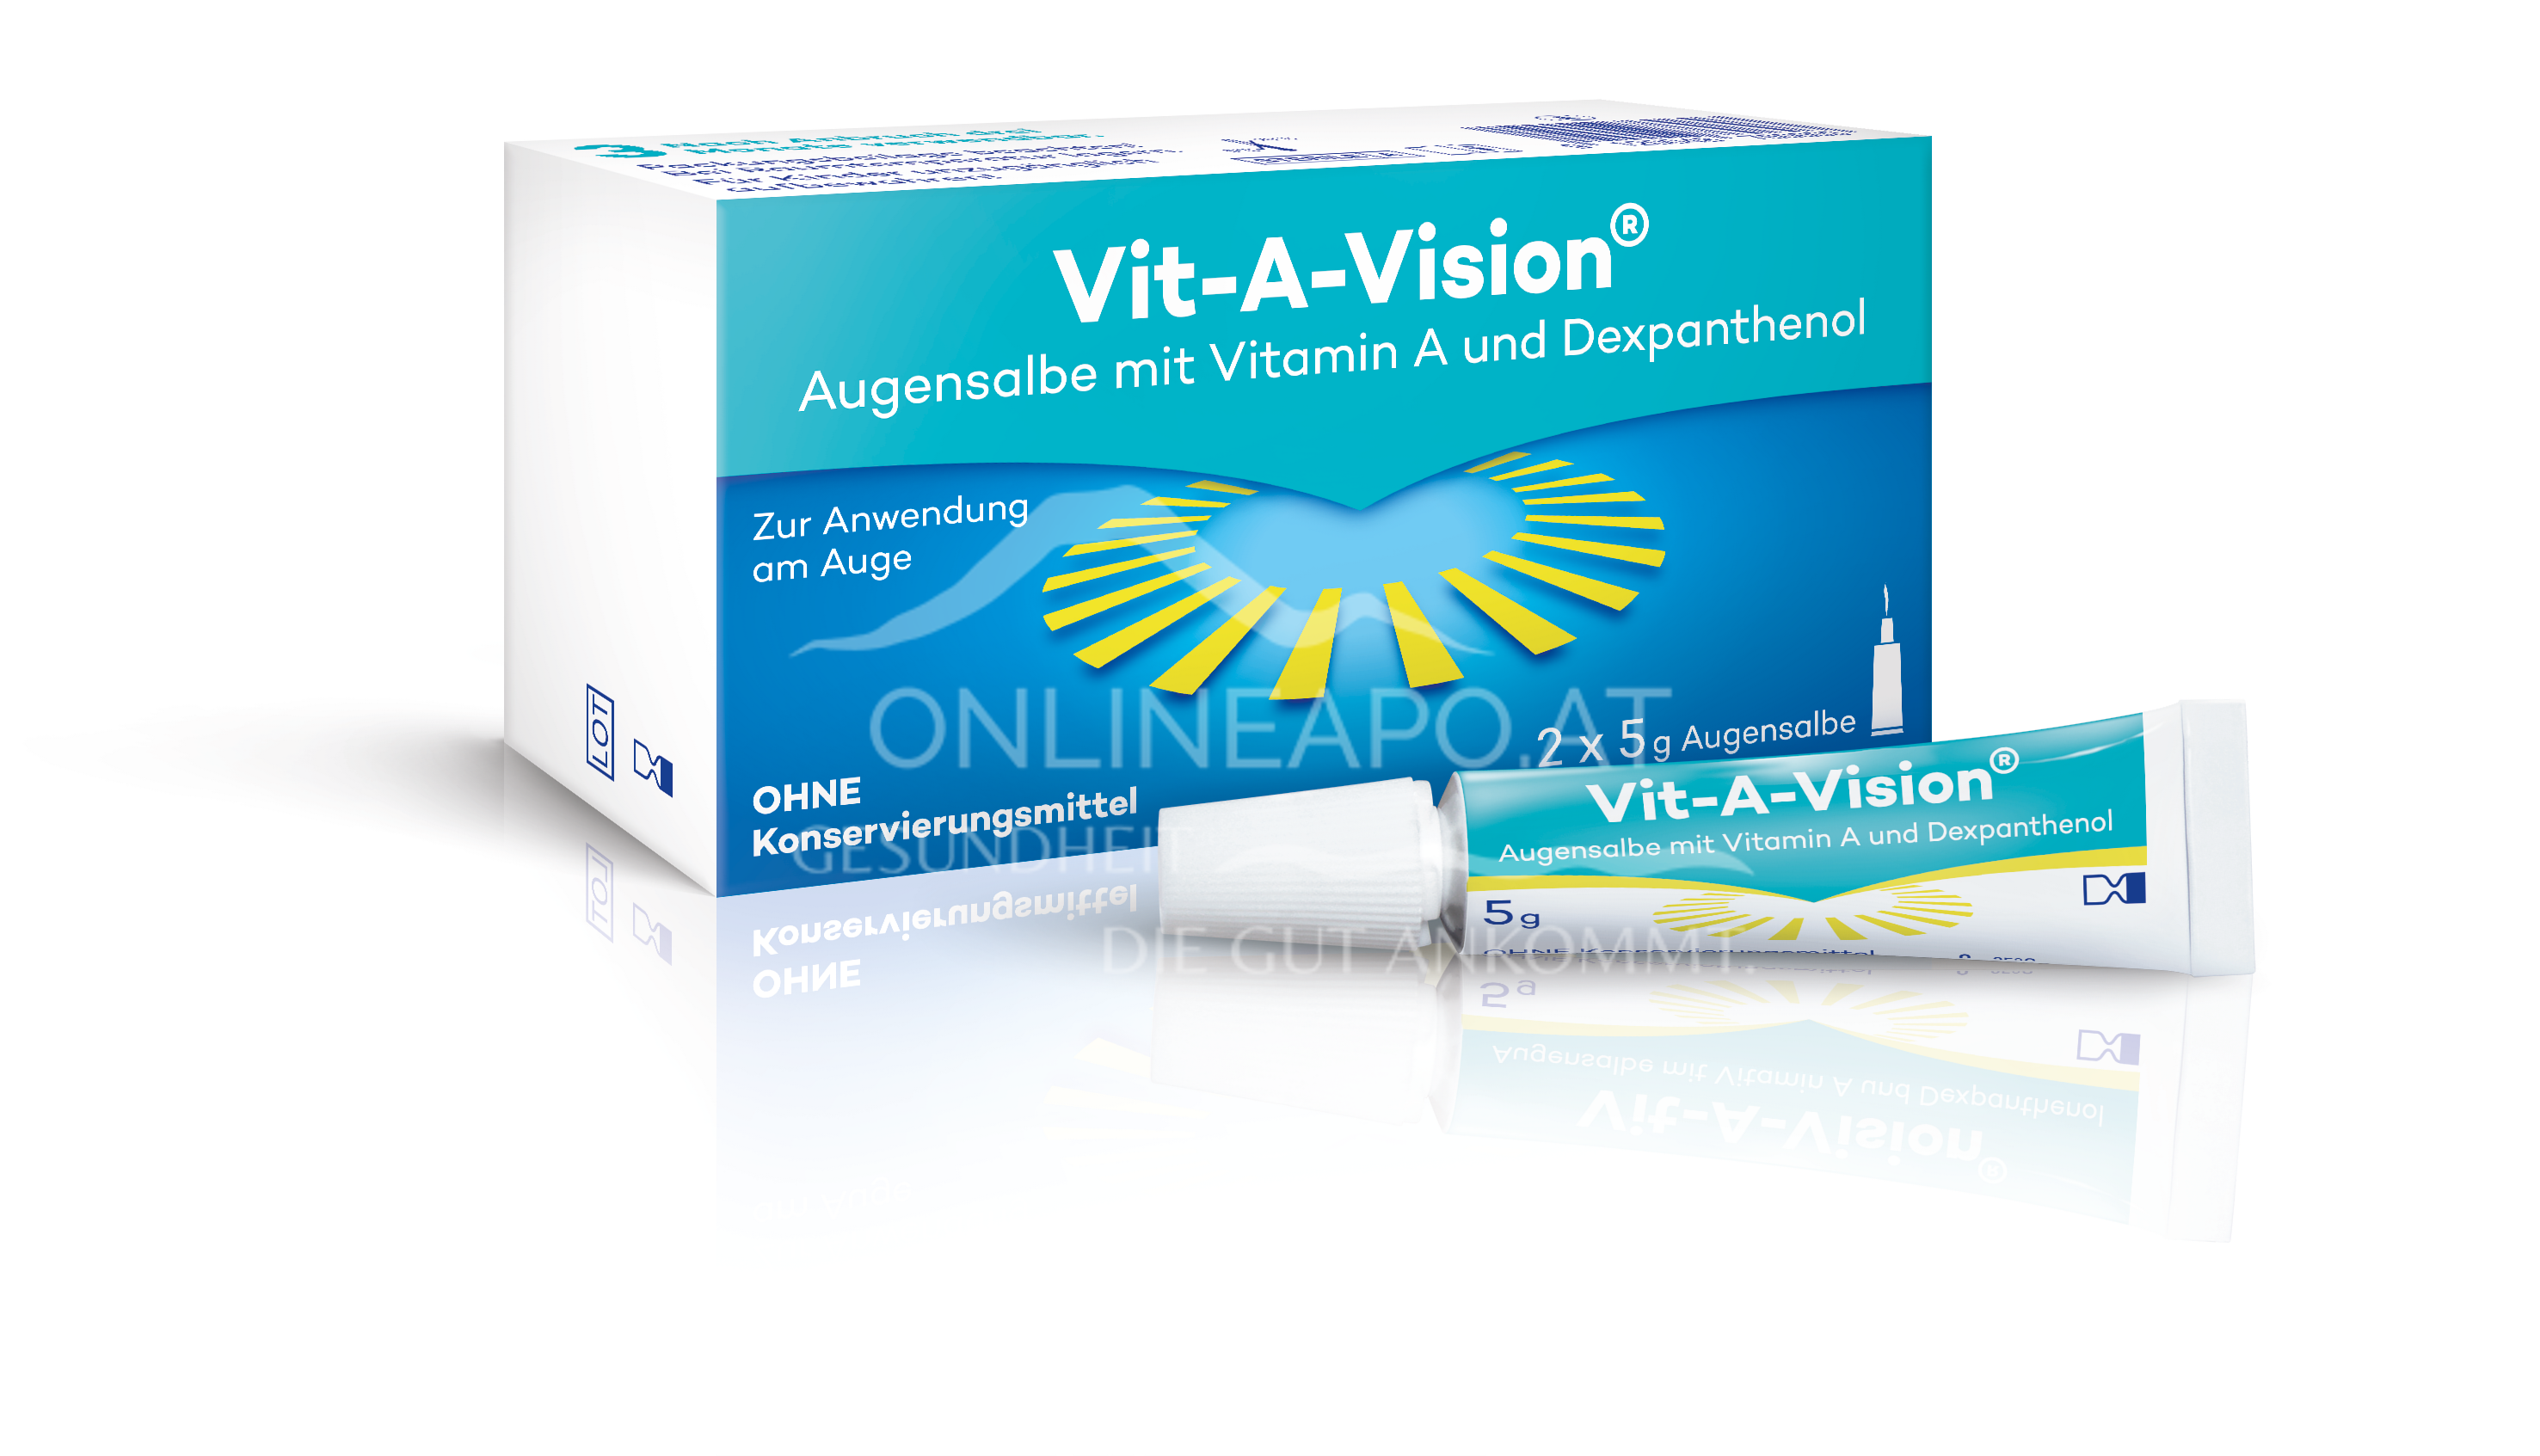 Vit-A-Vision® Augensalbe 2x5g